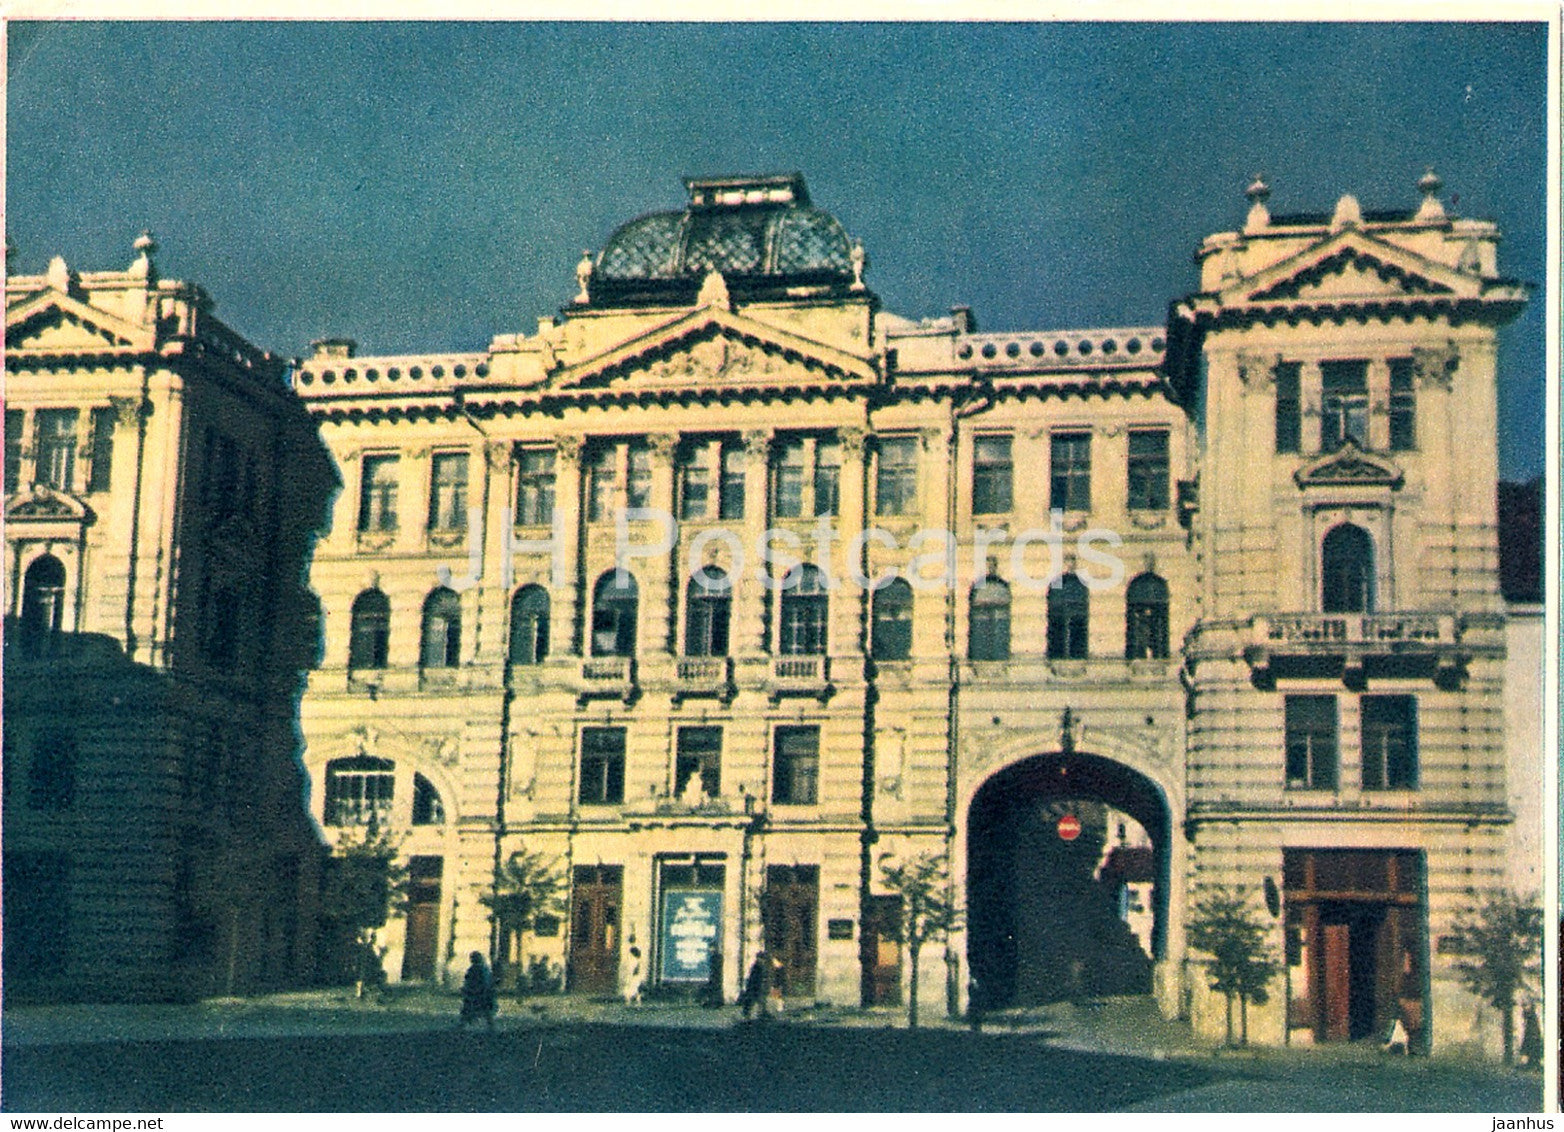 Vilnius - State Philharmonic - 1955 - Lithuania USSR - unused - JH Postcards